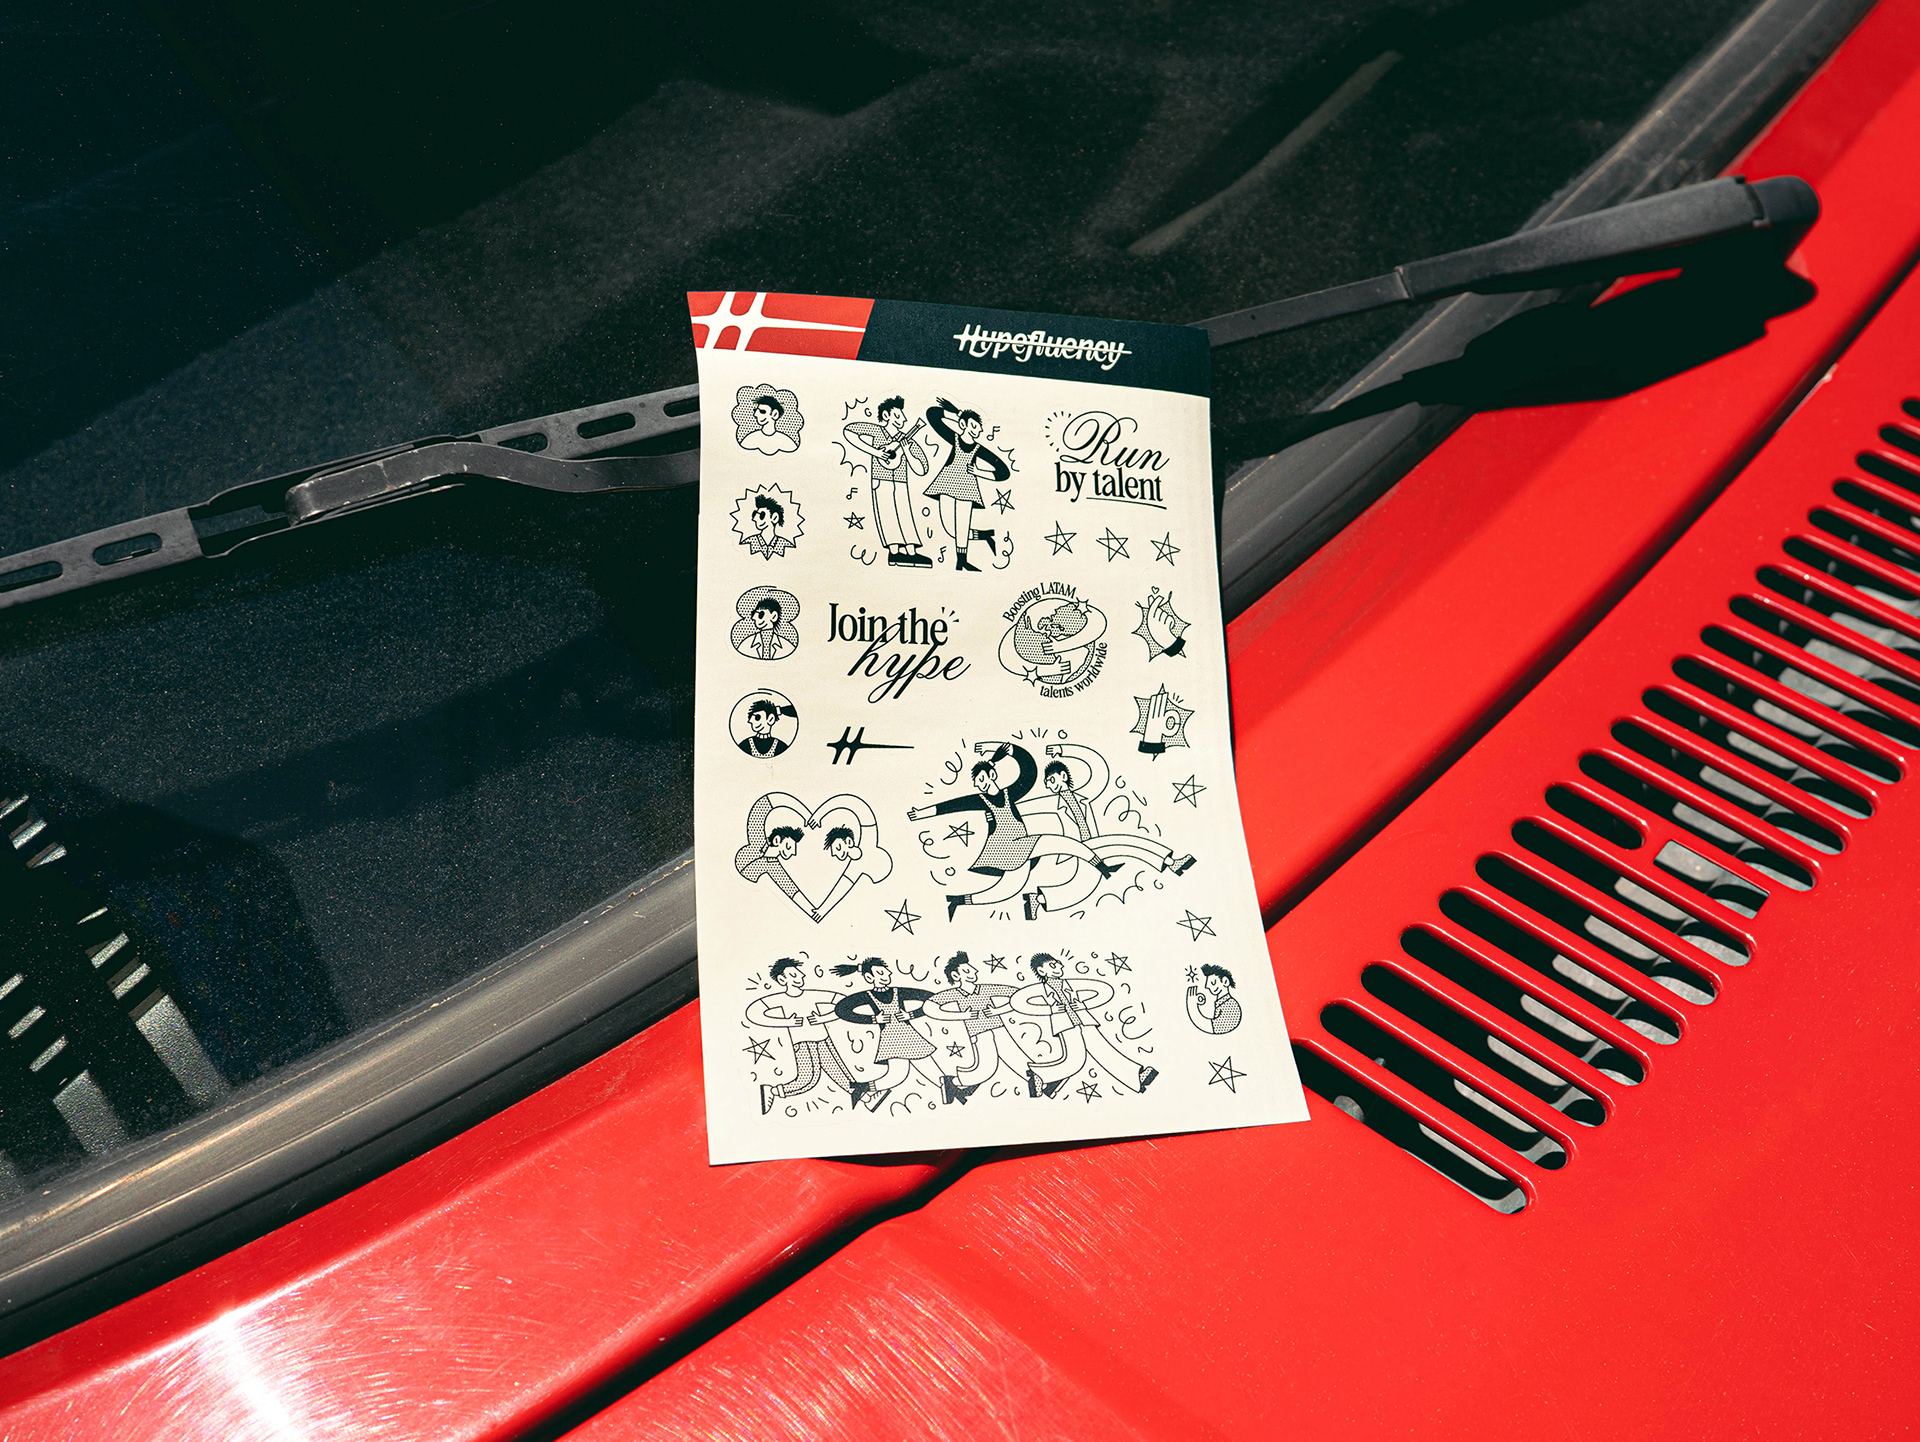 Hypefluency's sticker set over a red car